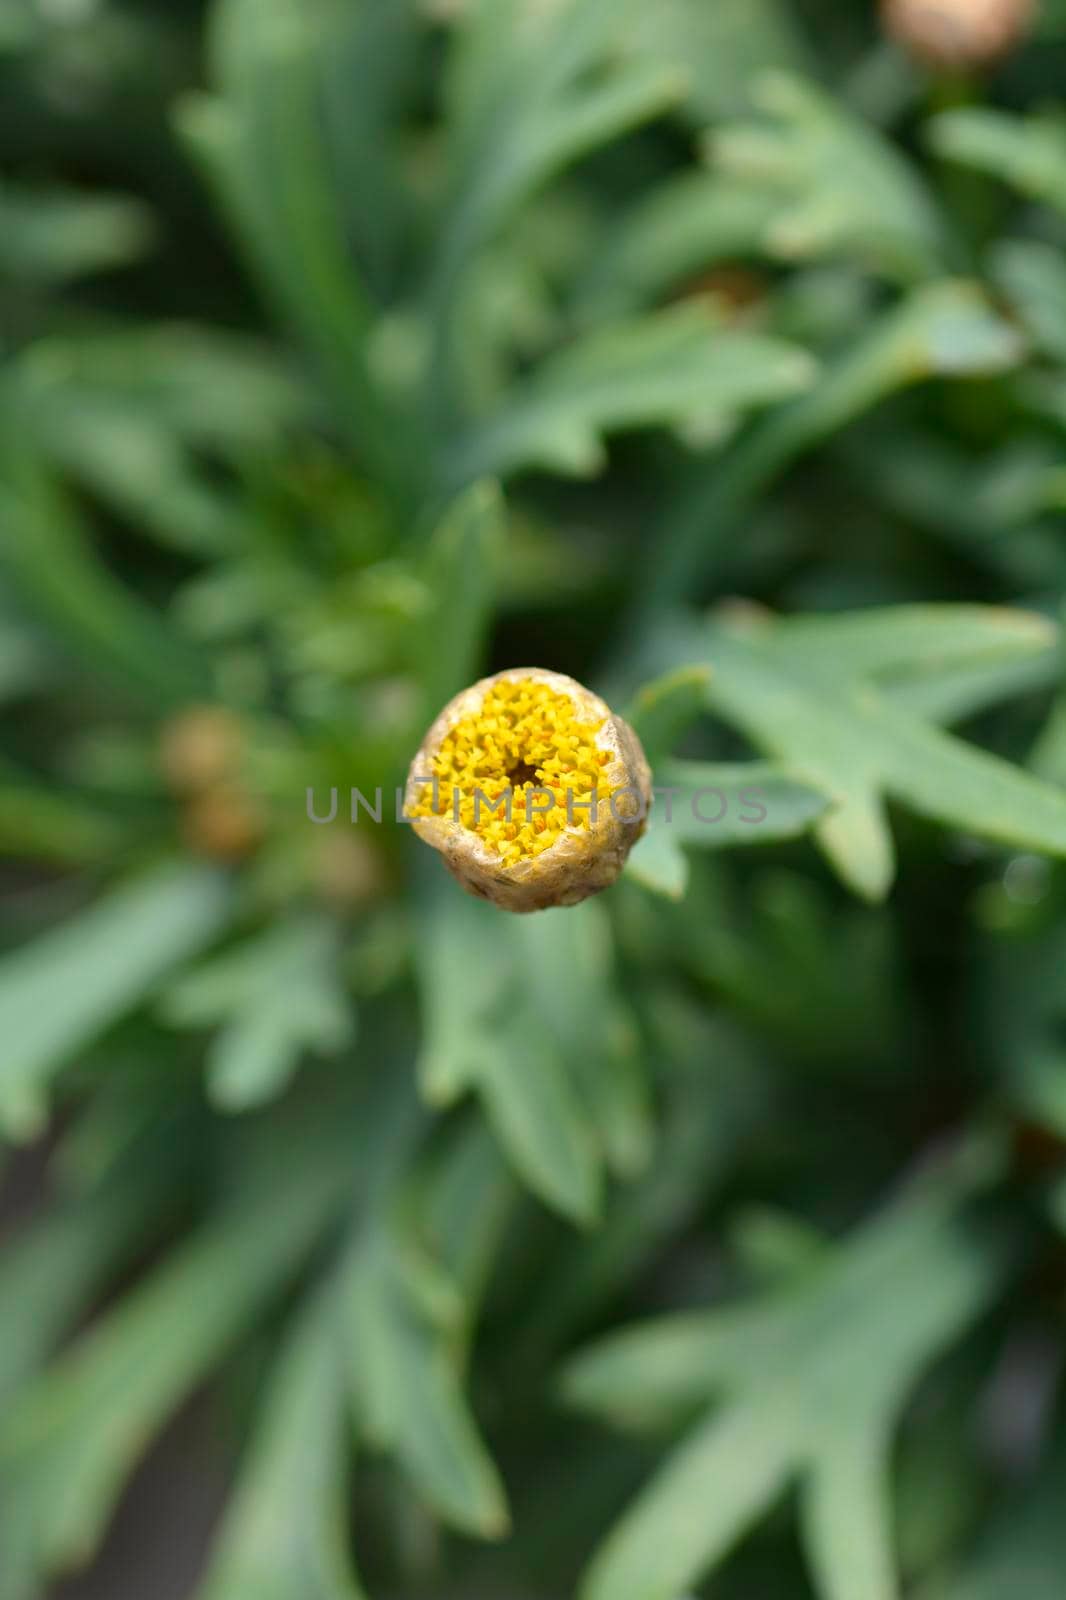 Marguerite daisy flower bud - Latin name - Argyranthemum frutescens